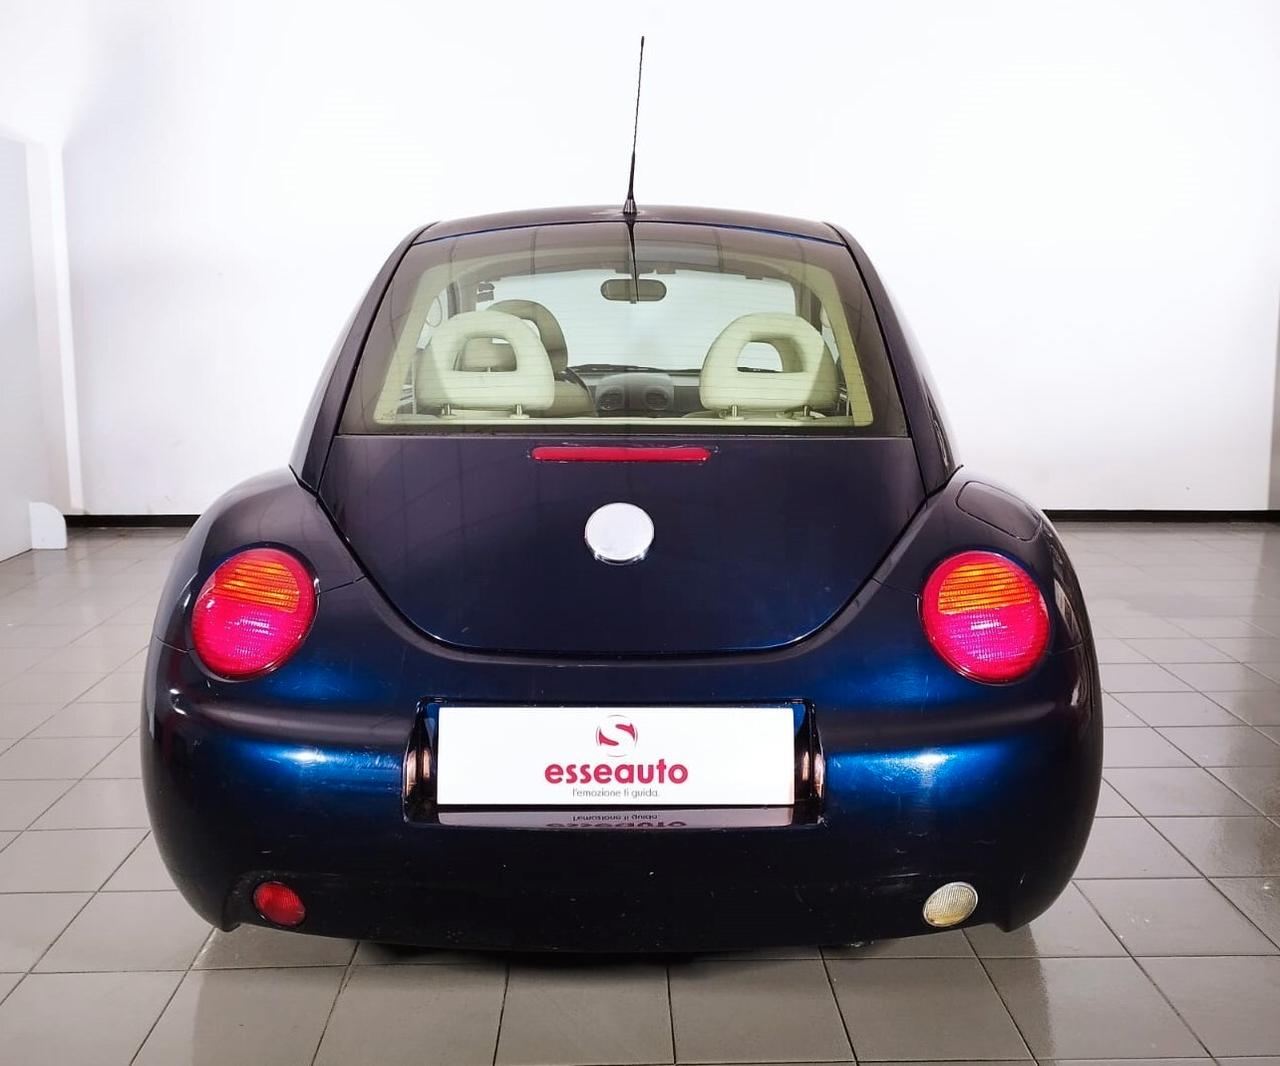 Volkswagen New Beetle 1.9 TDI VISIBILE SOLO SU APPUNTAMENTO